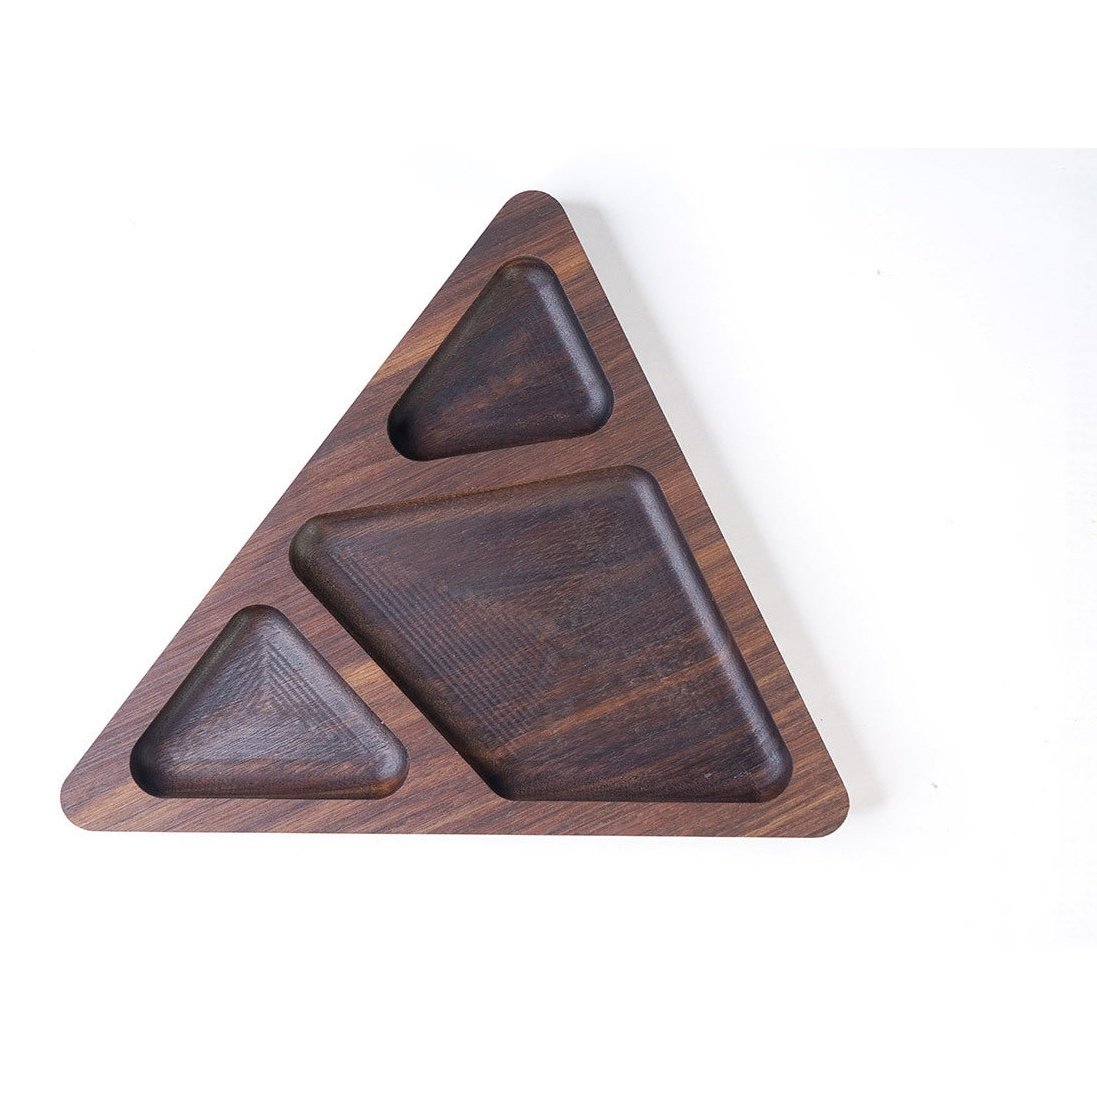 Tablett aus Walnussholz - Dreieck - Tablett - Third Eye Creation Company | Waya